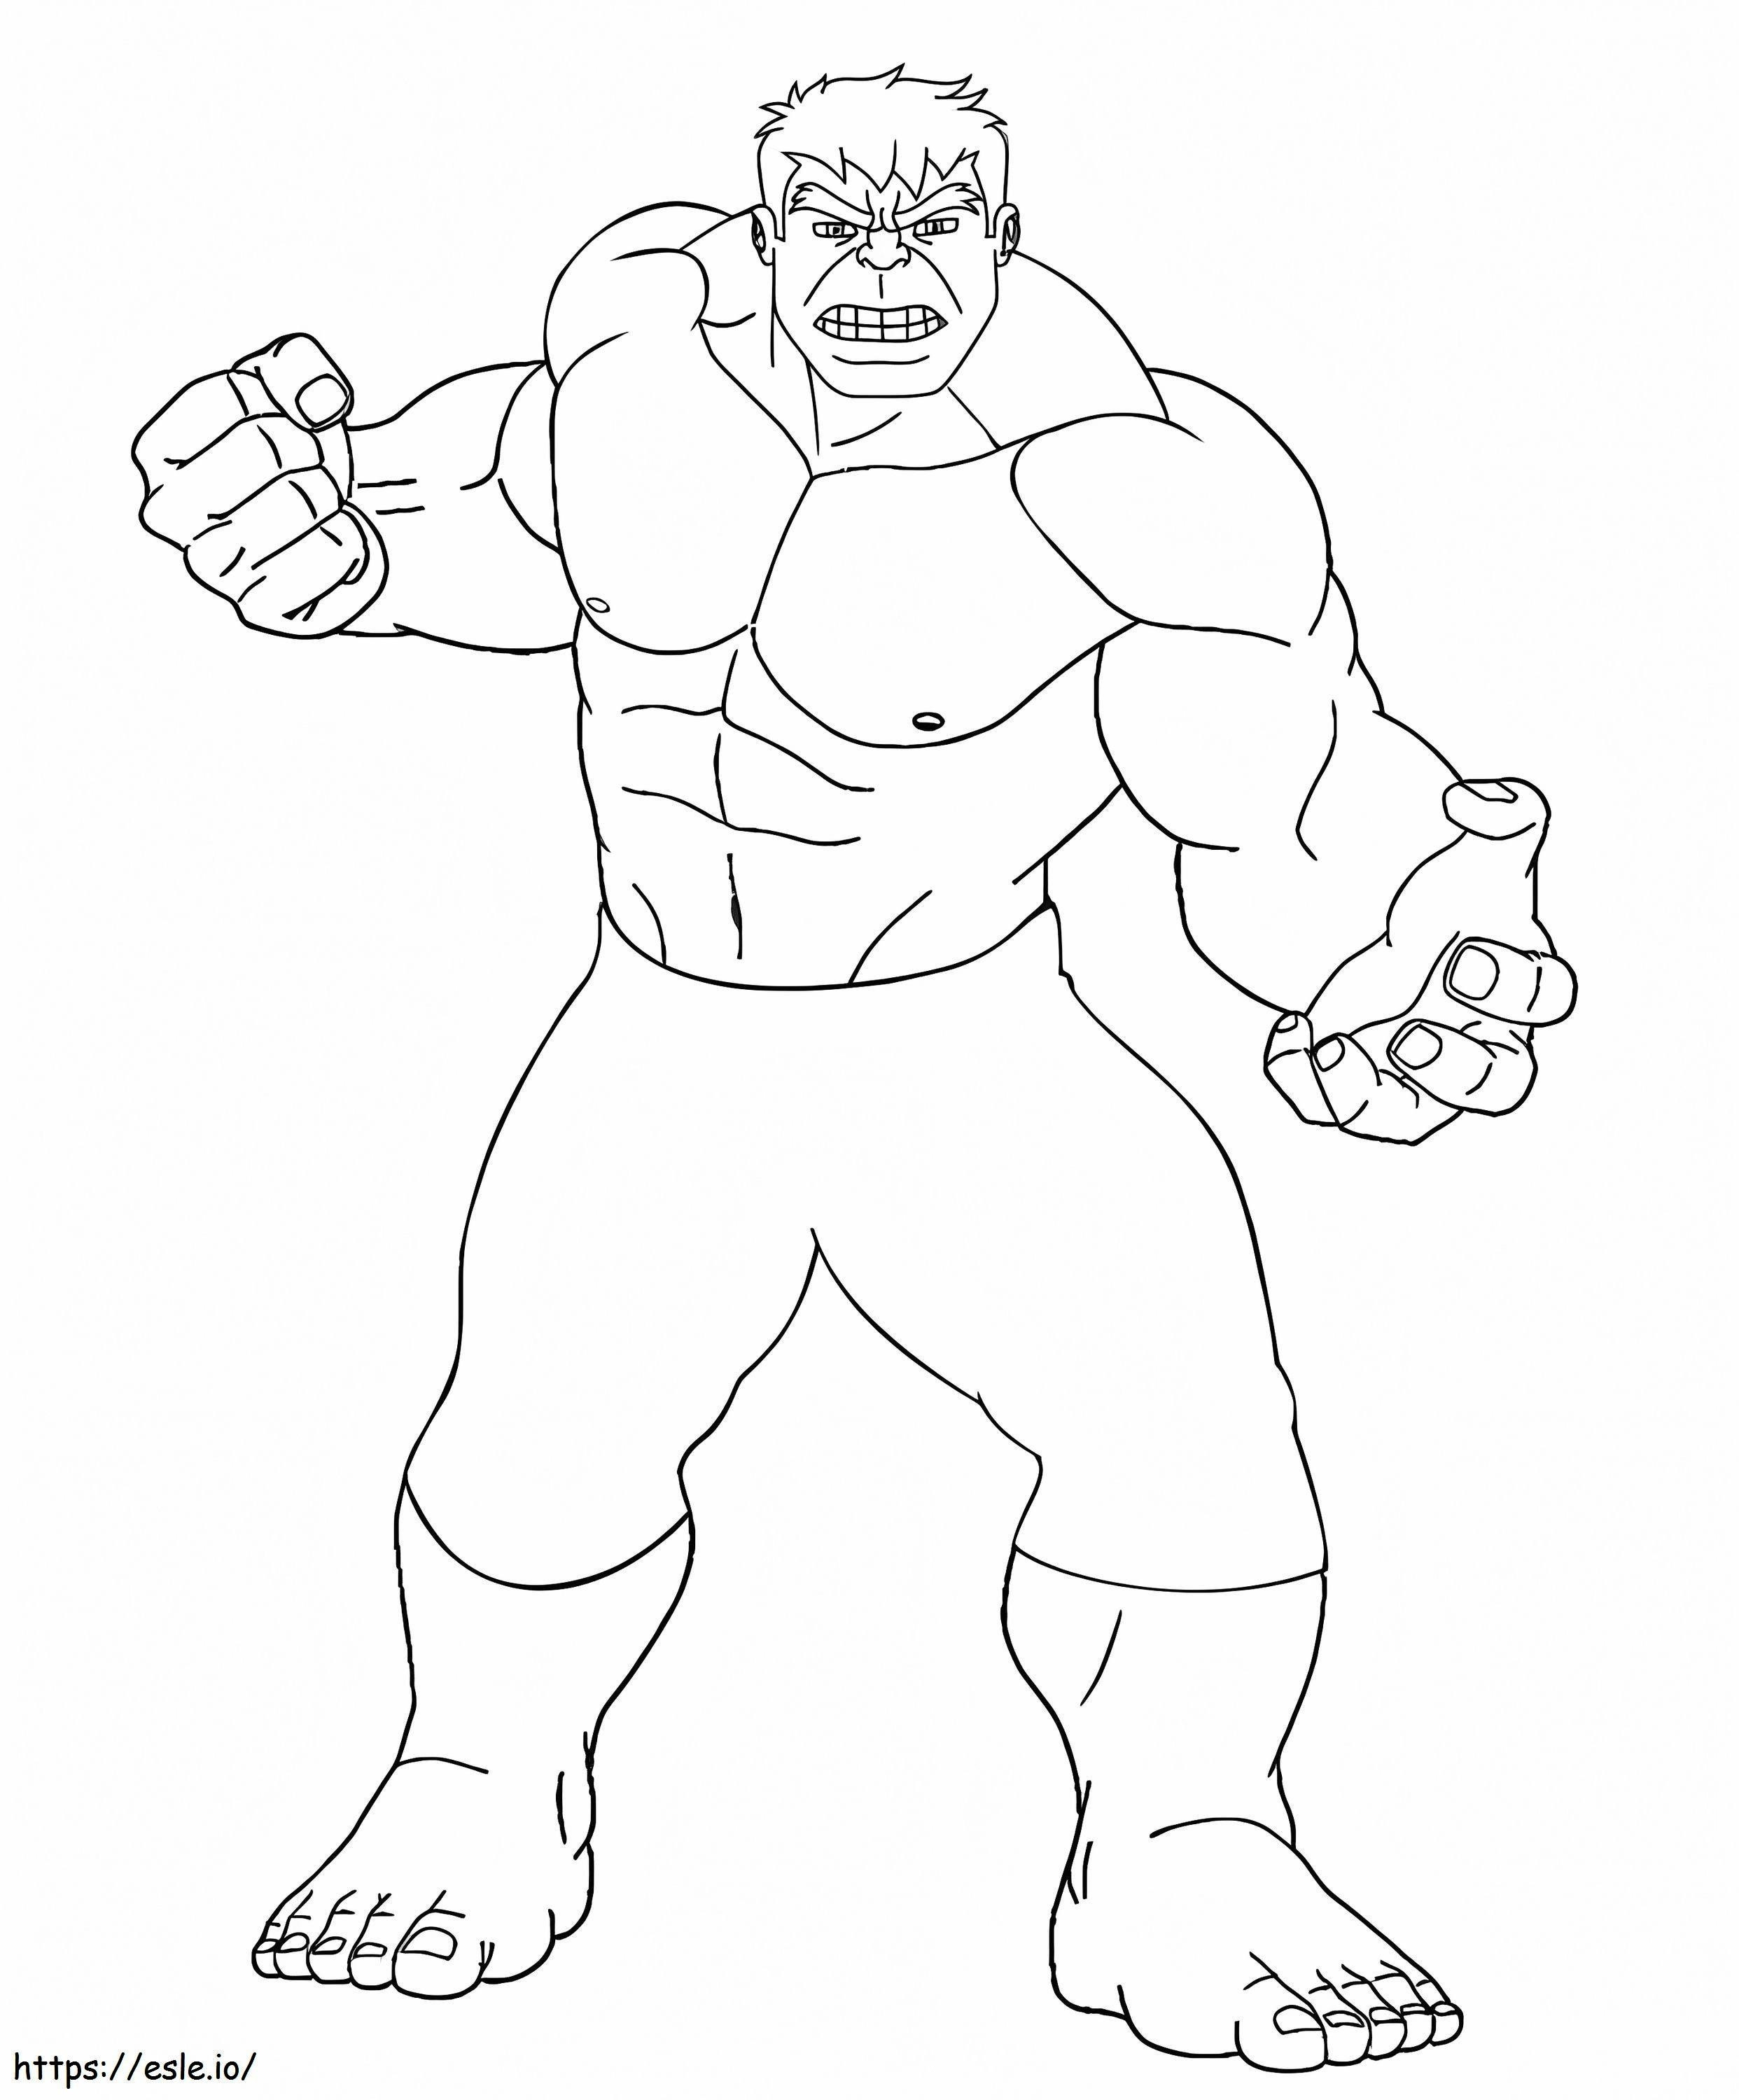 Hulk di base da colorare